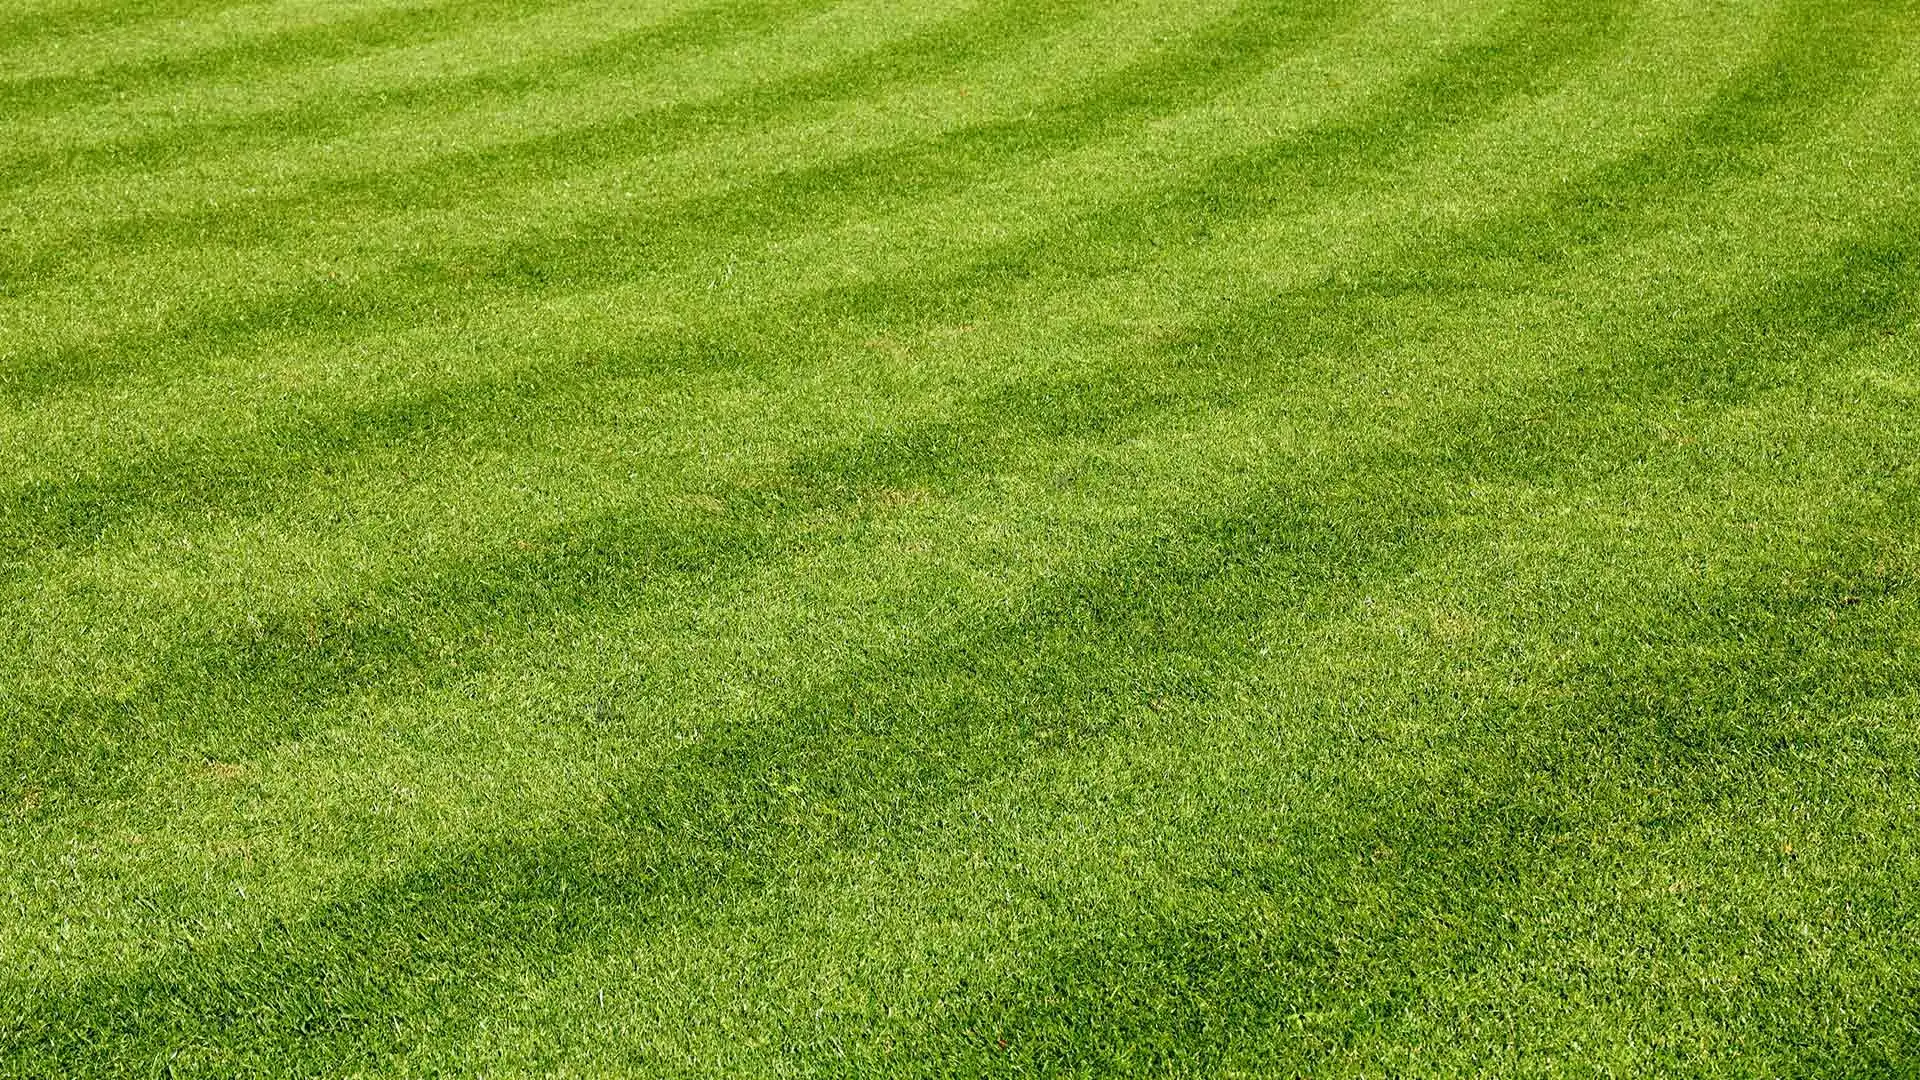 Freshly mowed green grass lawn in Ada, MI.